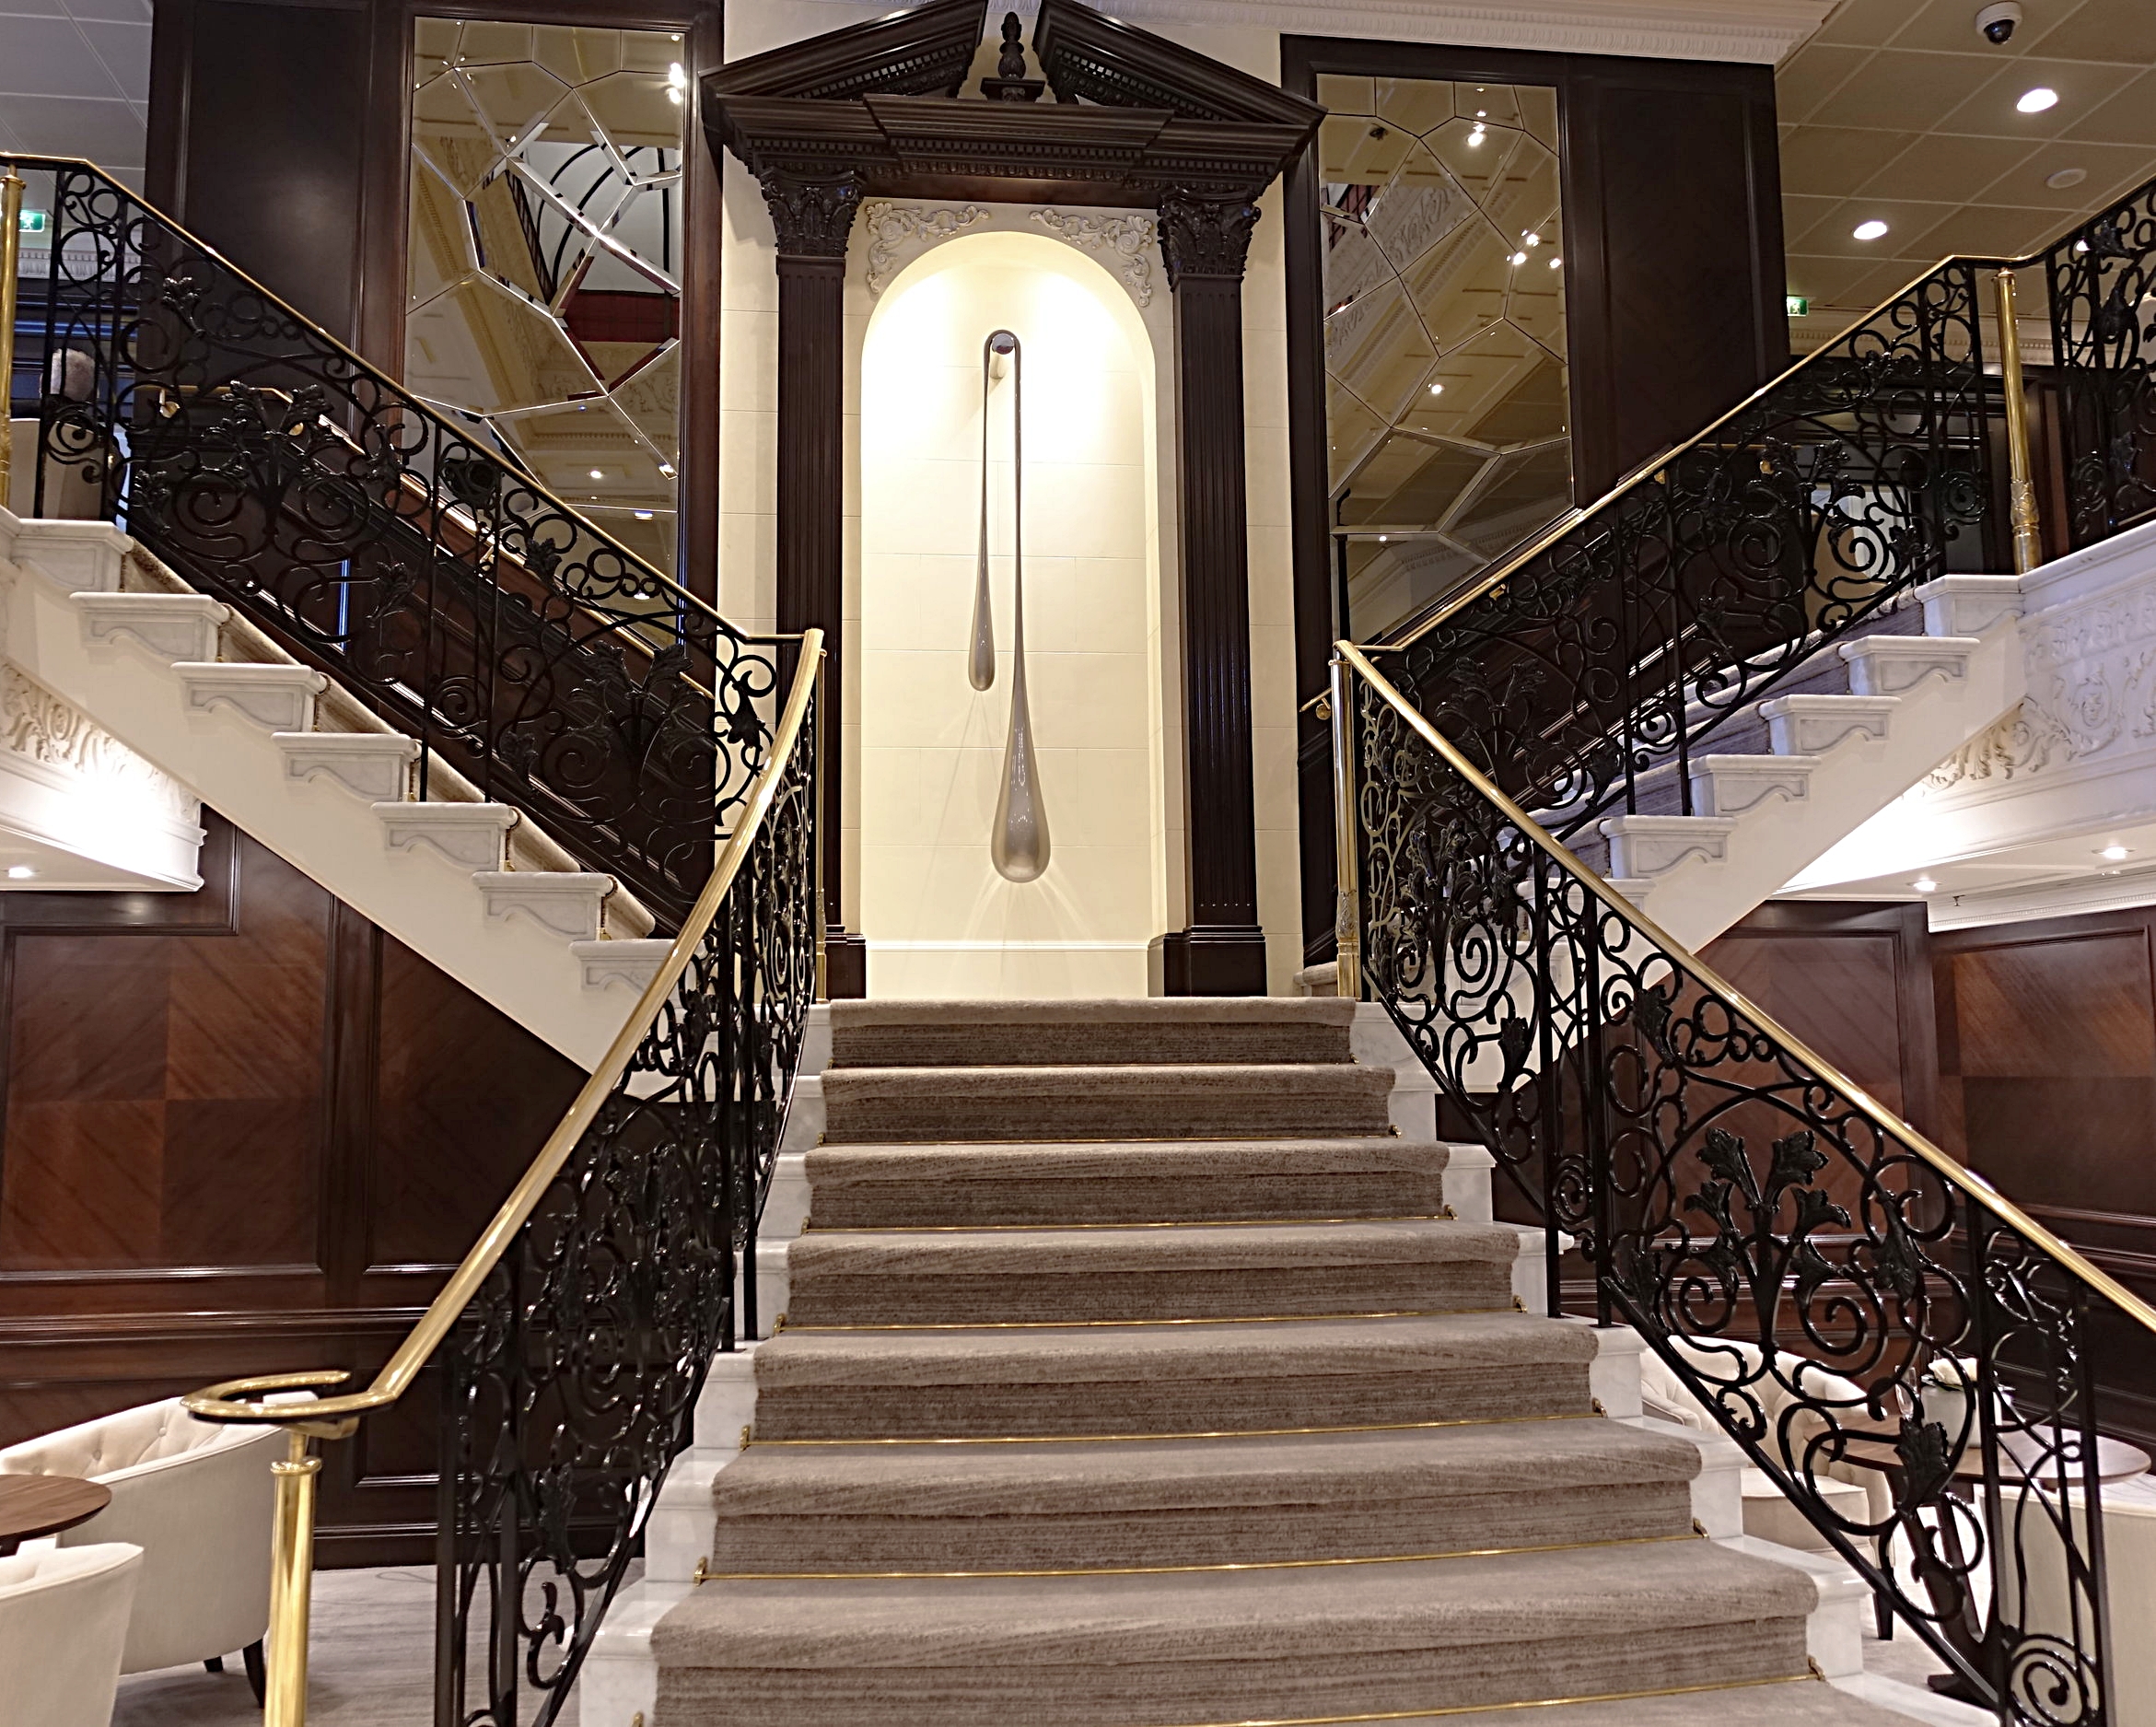  The elegant staircase in the main atrium. 